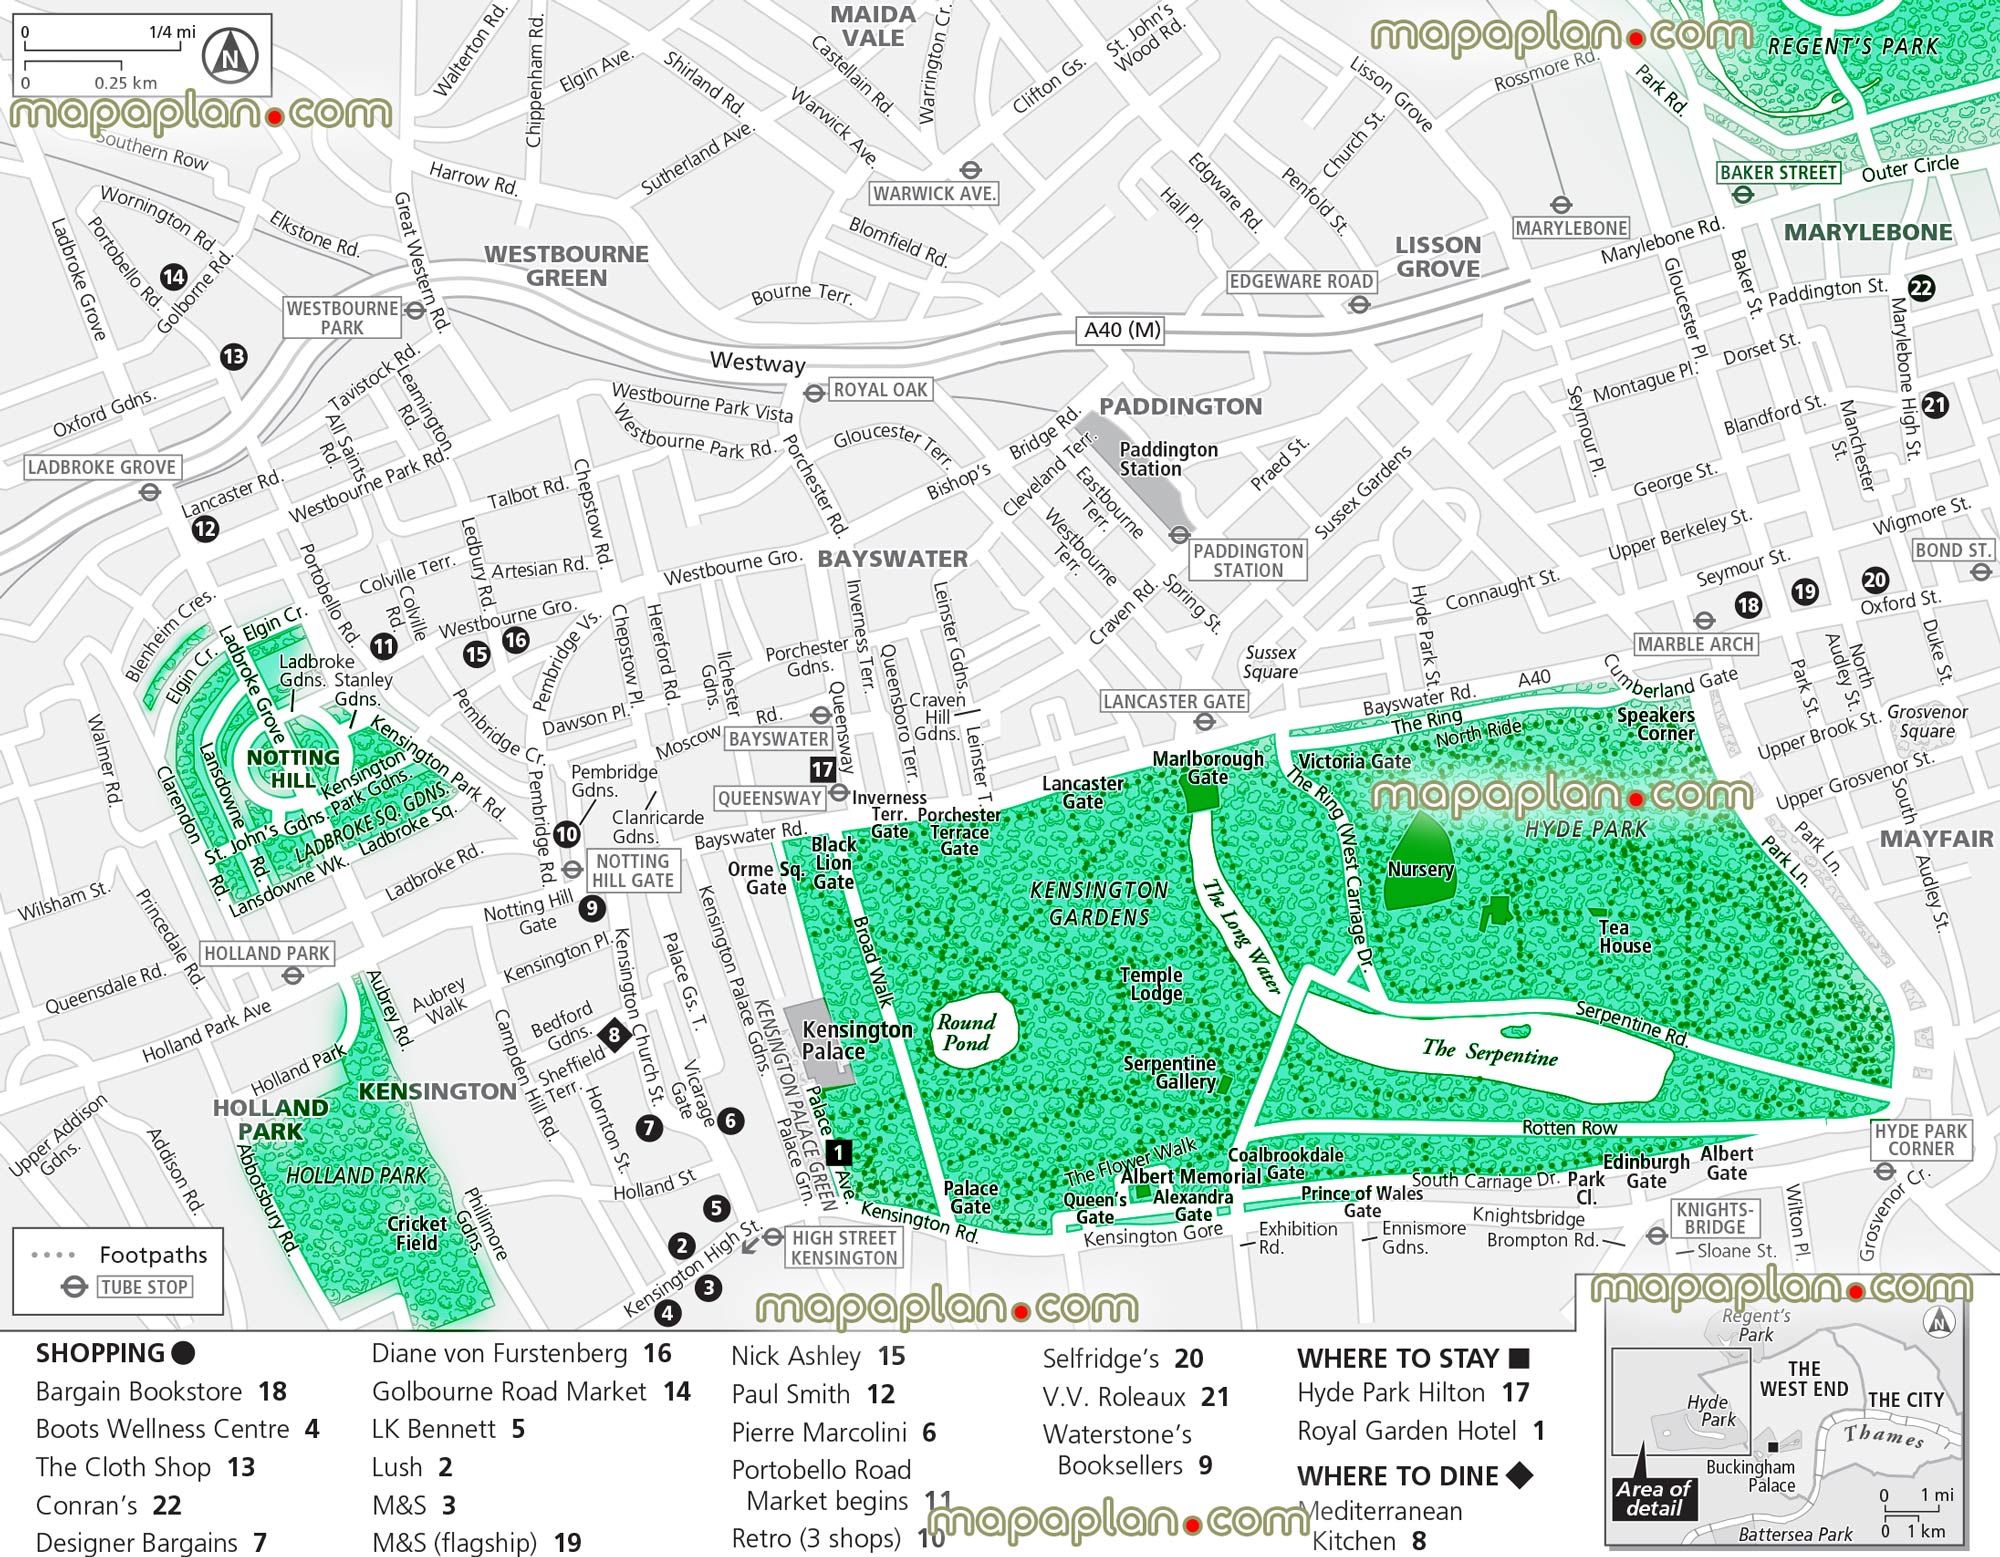 kensington notting hill marylebone shopping accommodation restaurantss London Top tourist attractions map